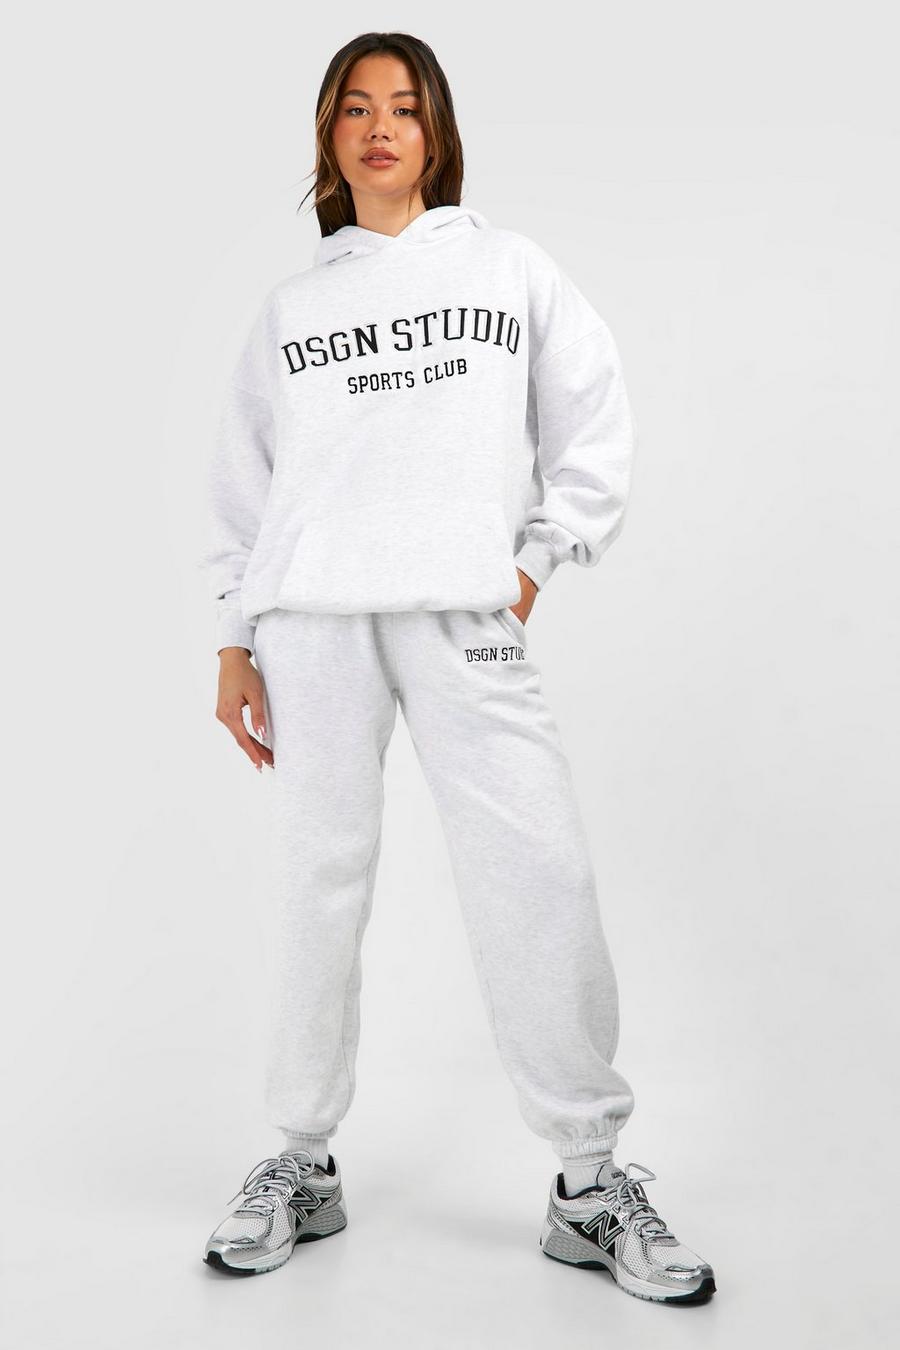 Pantaloni tuta oversize Dsgn Studio con applique, Ash grey image number 1